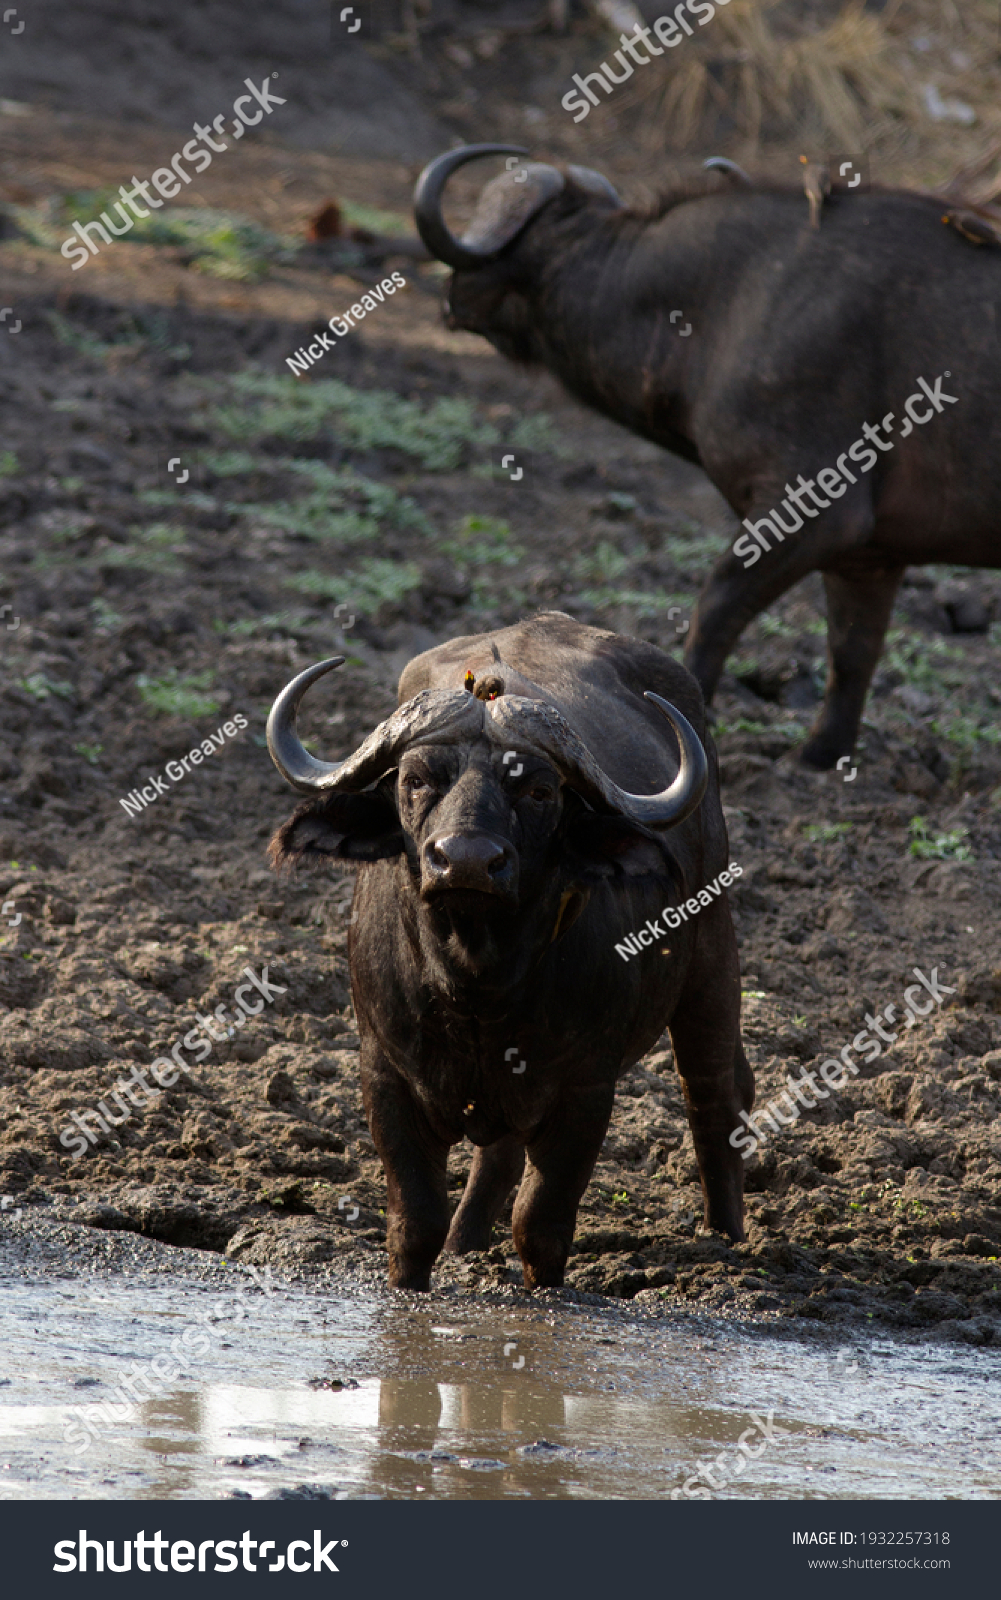 Kemi kindben Tilmeld Buffalo Bull Takes Drink Shrinking Waterhole Stock Photo (Edit Now)  1932257318